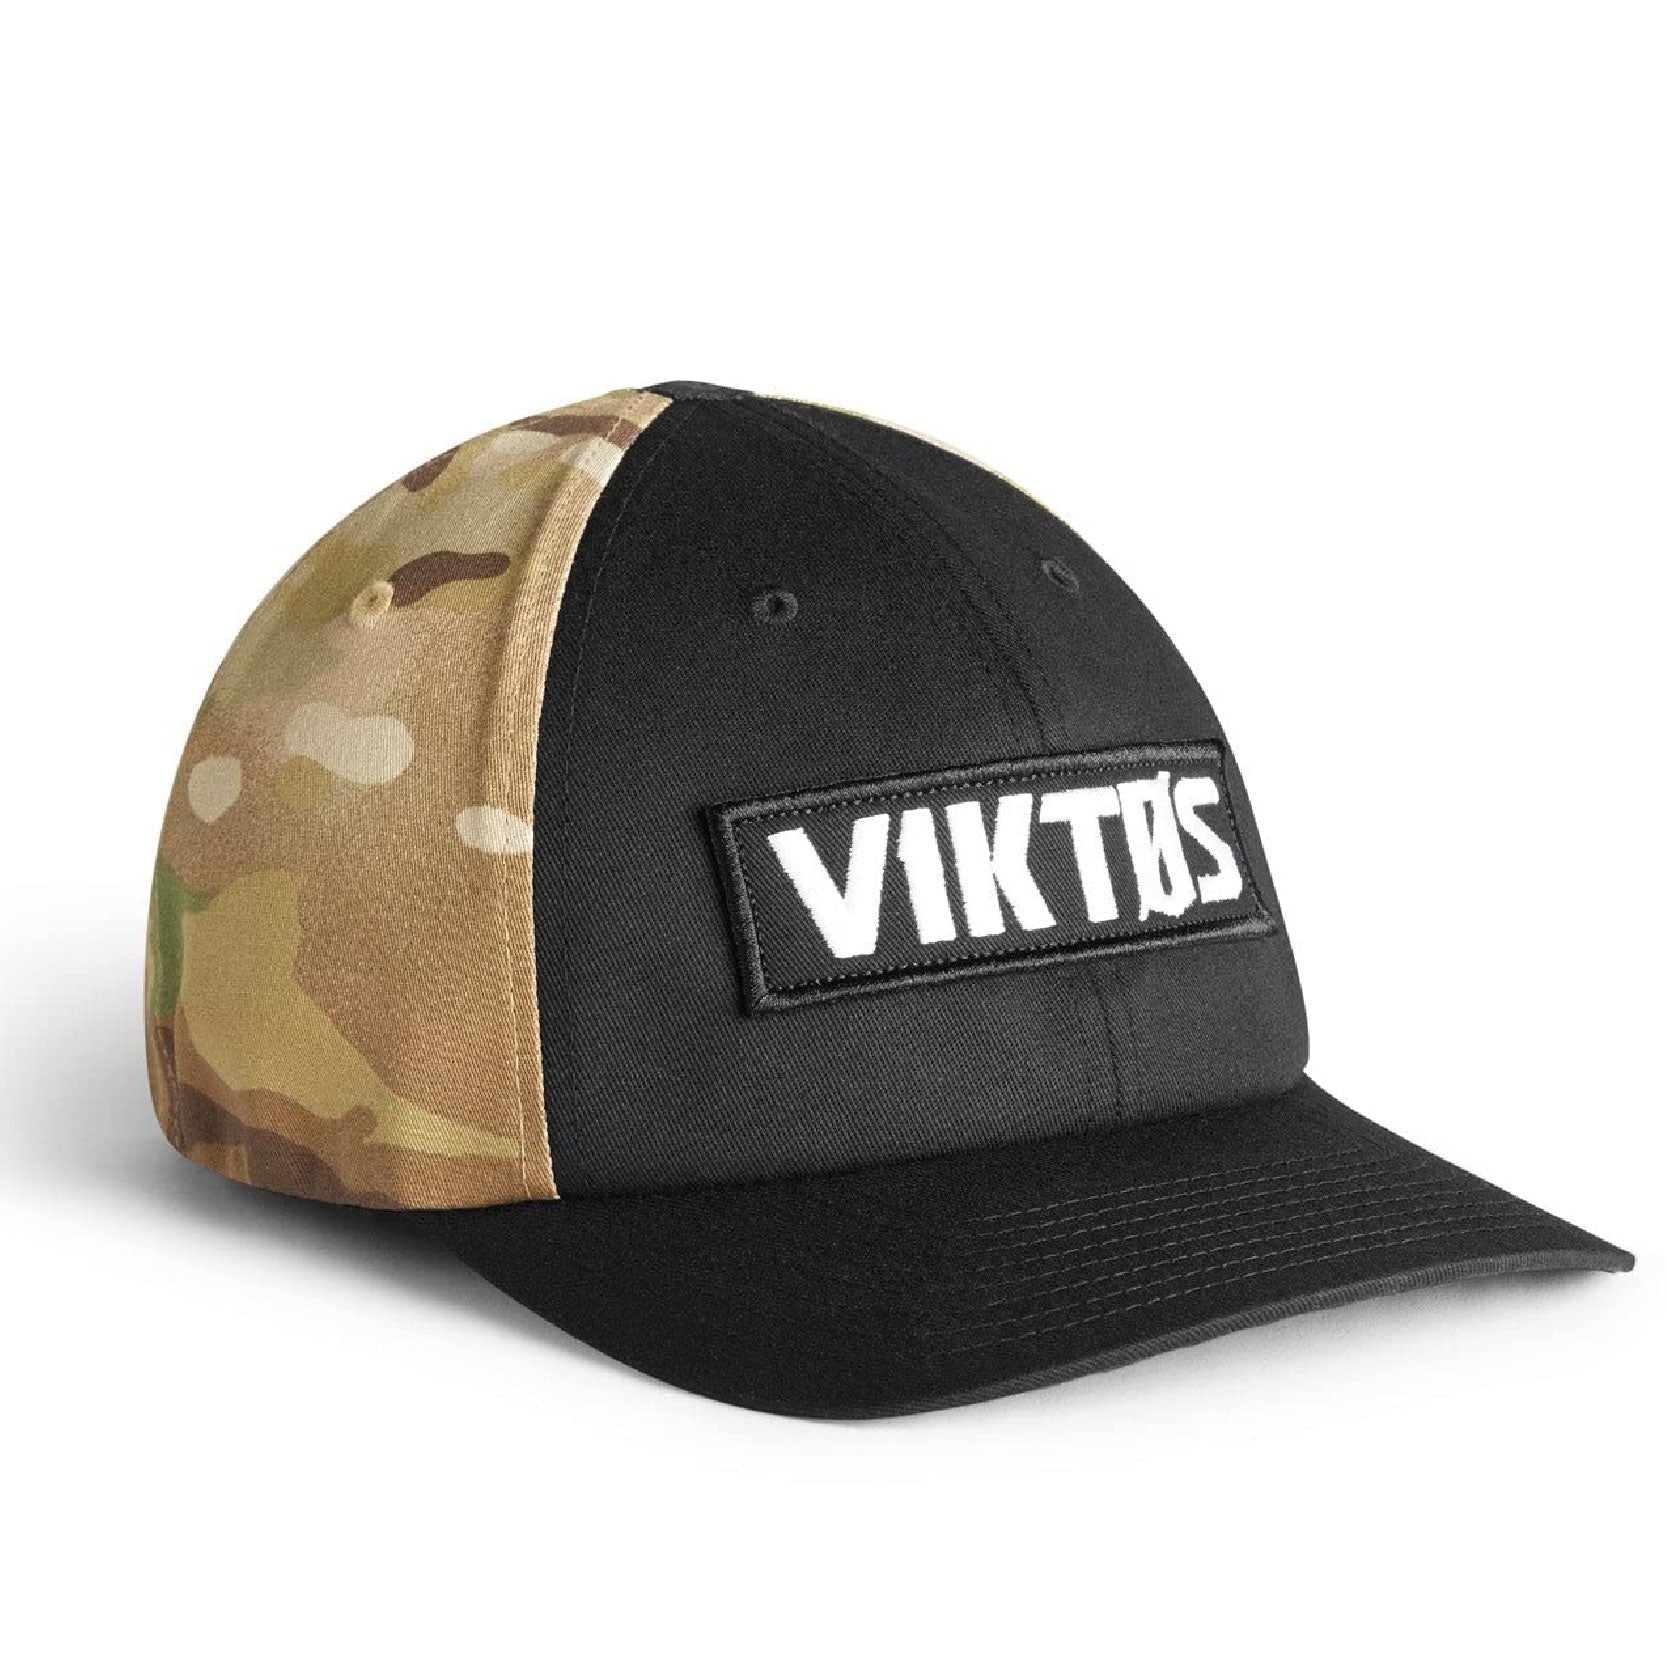 VIKTOS Shooter Hat [Spartan]